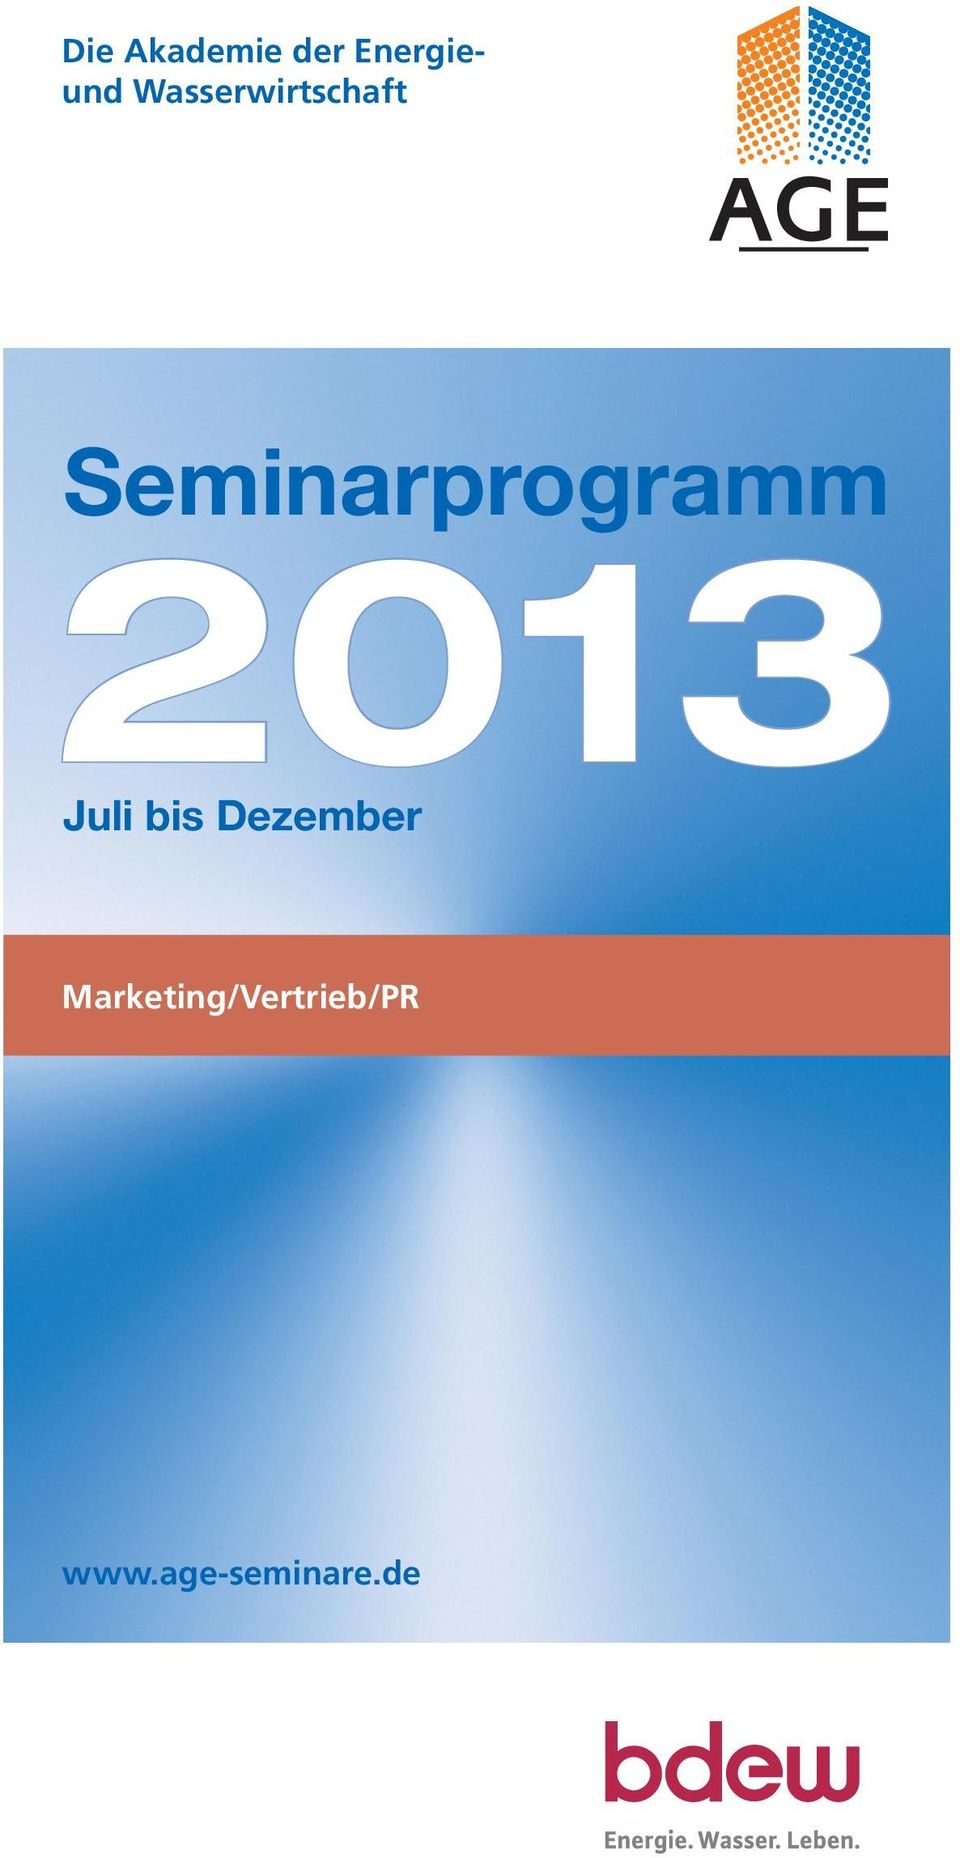 Seminarprogramm 2013 Juli bis